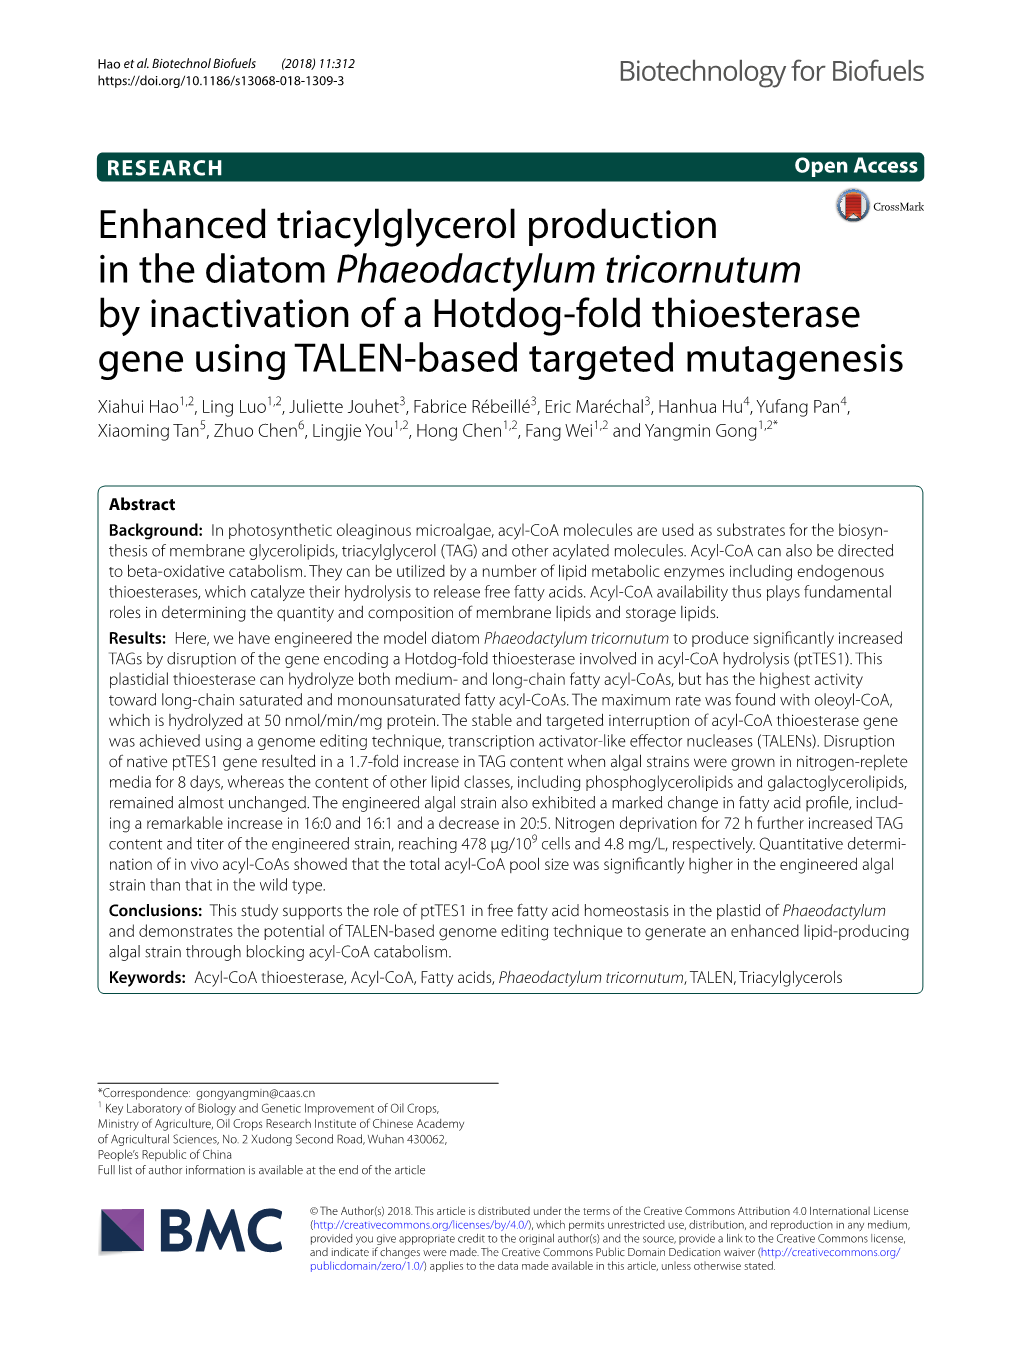 Enhanced Triacylglycerol Production in the Diatom Phaeodactylum